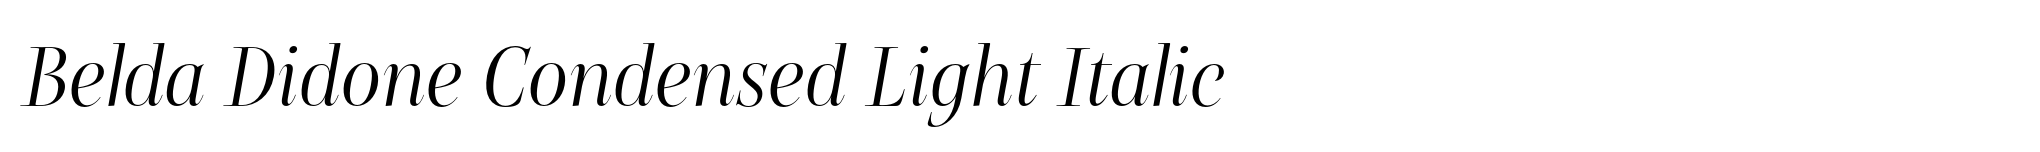 Belda Didone Condensed Light Italic image